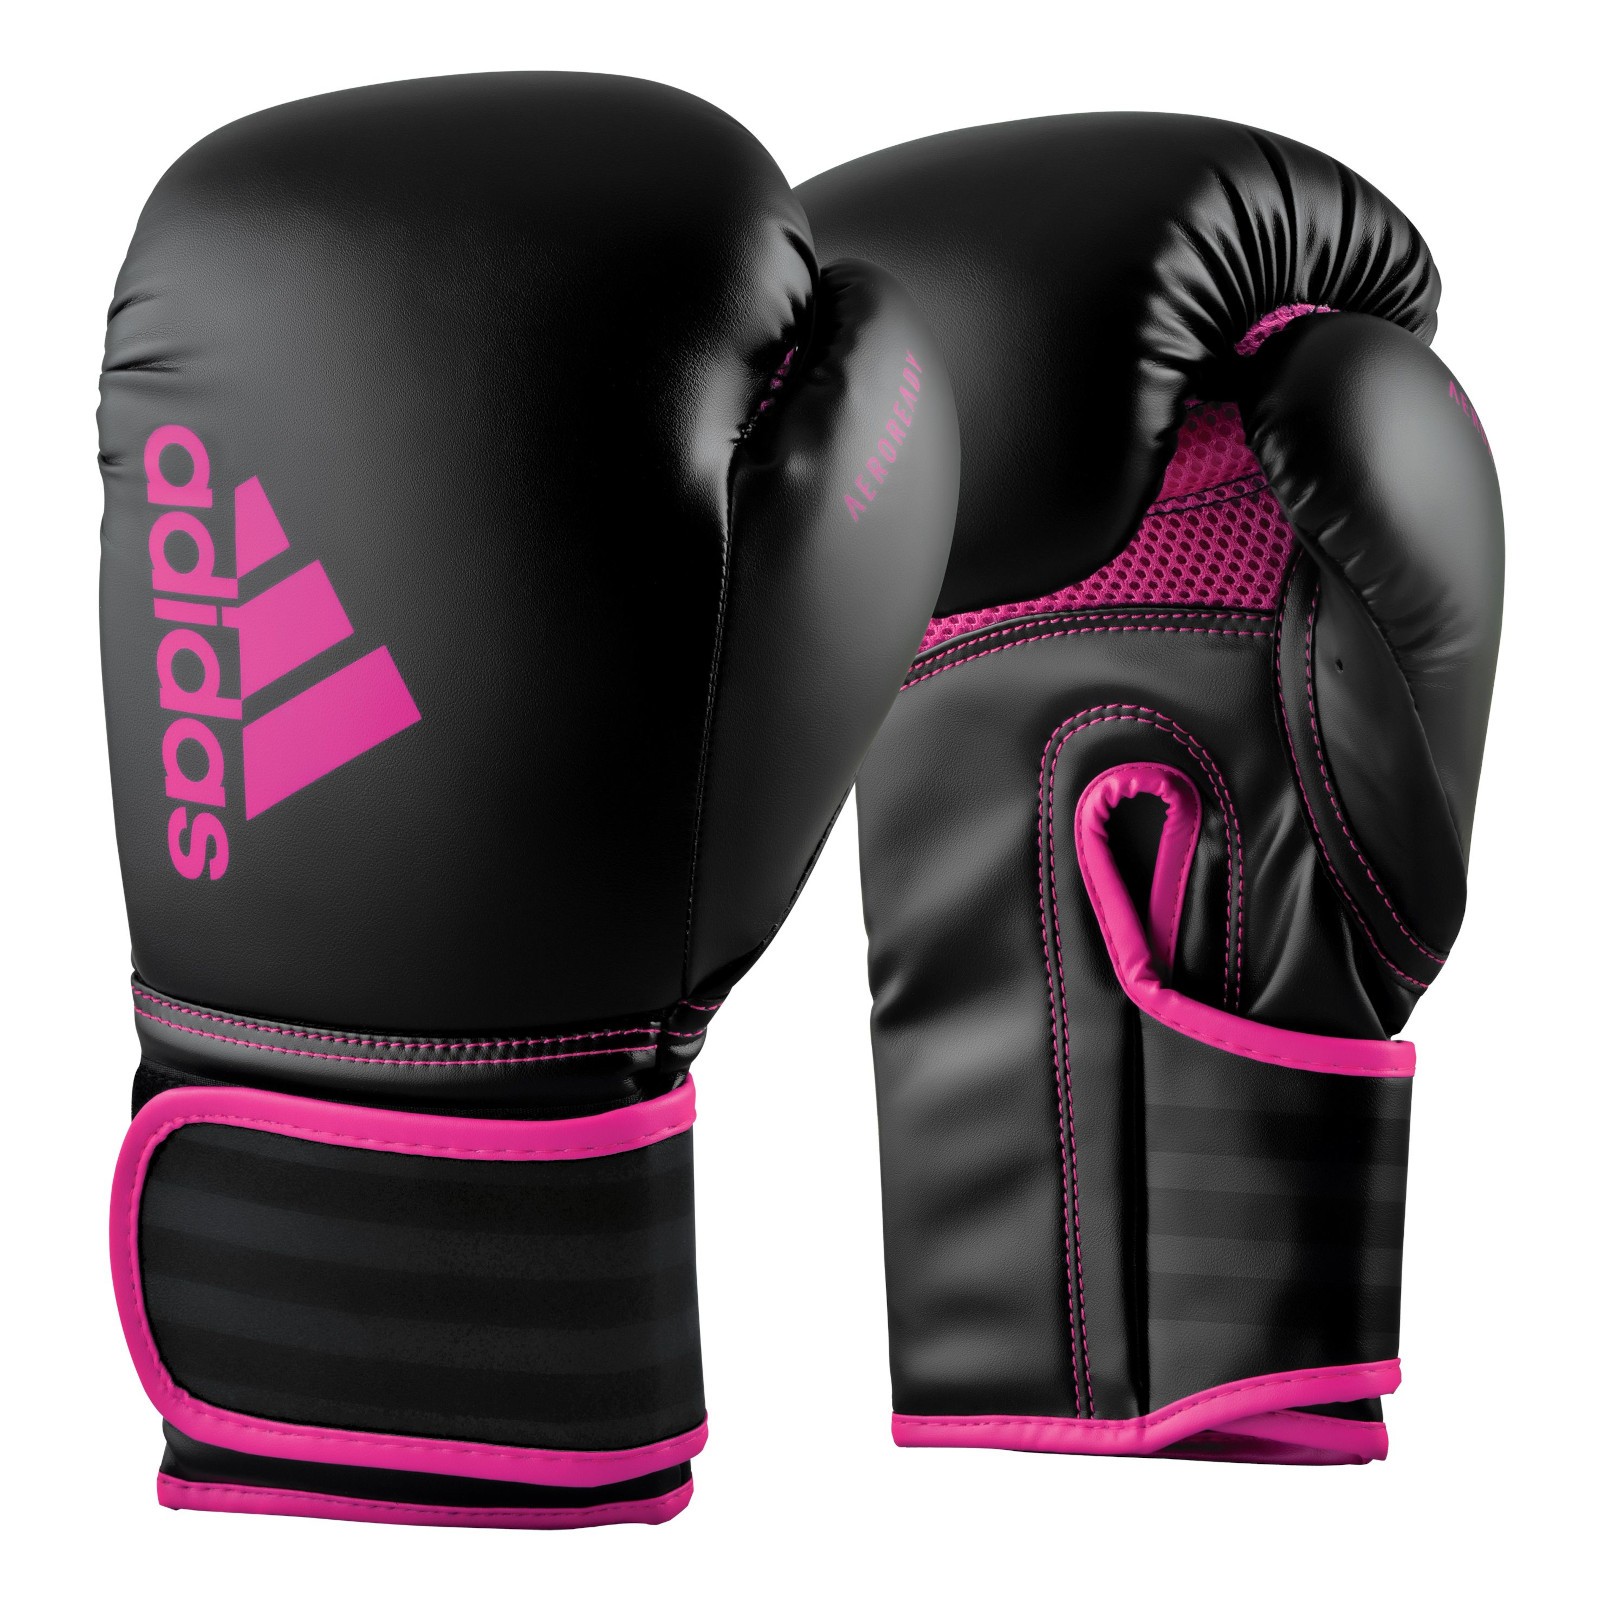 adidas Boxing Glove Hybrid 80 Fitshop 